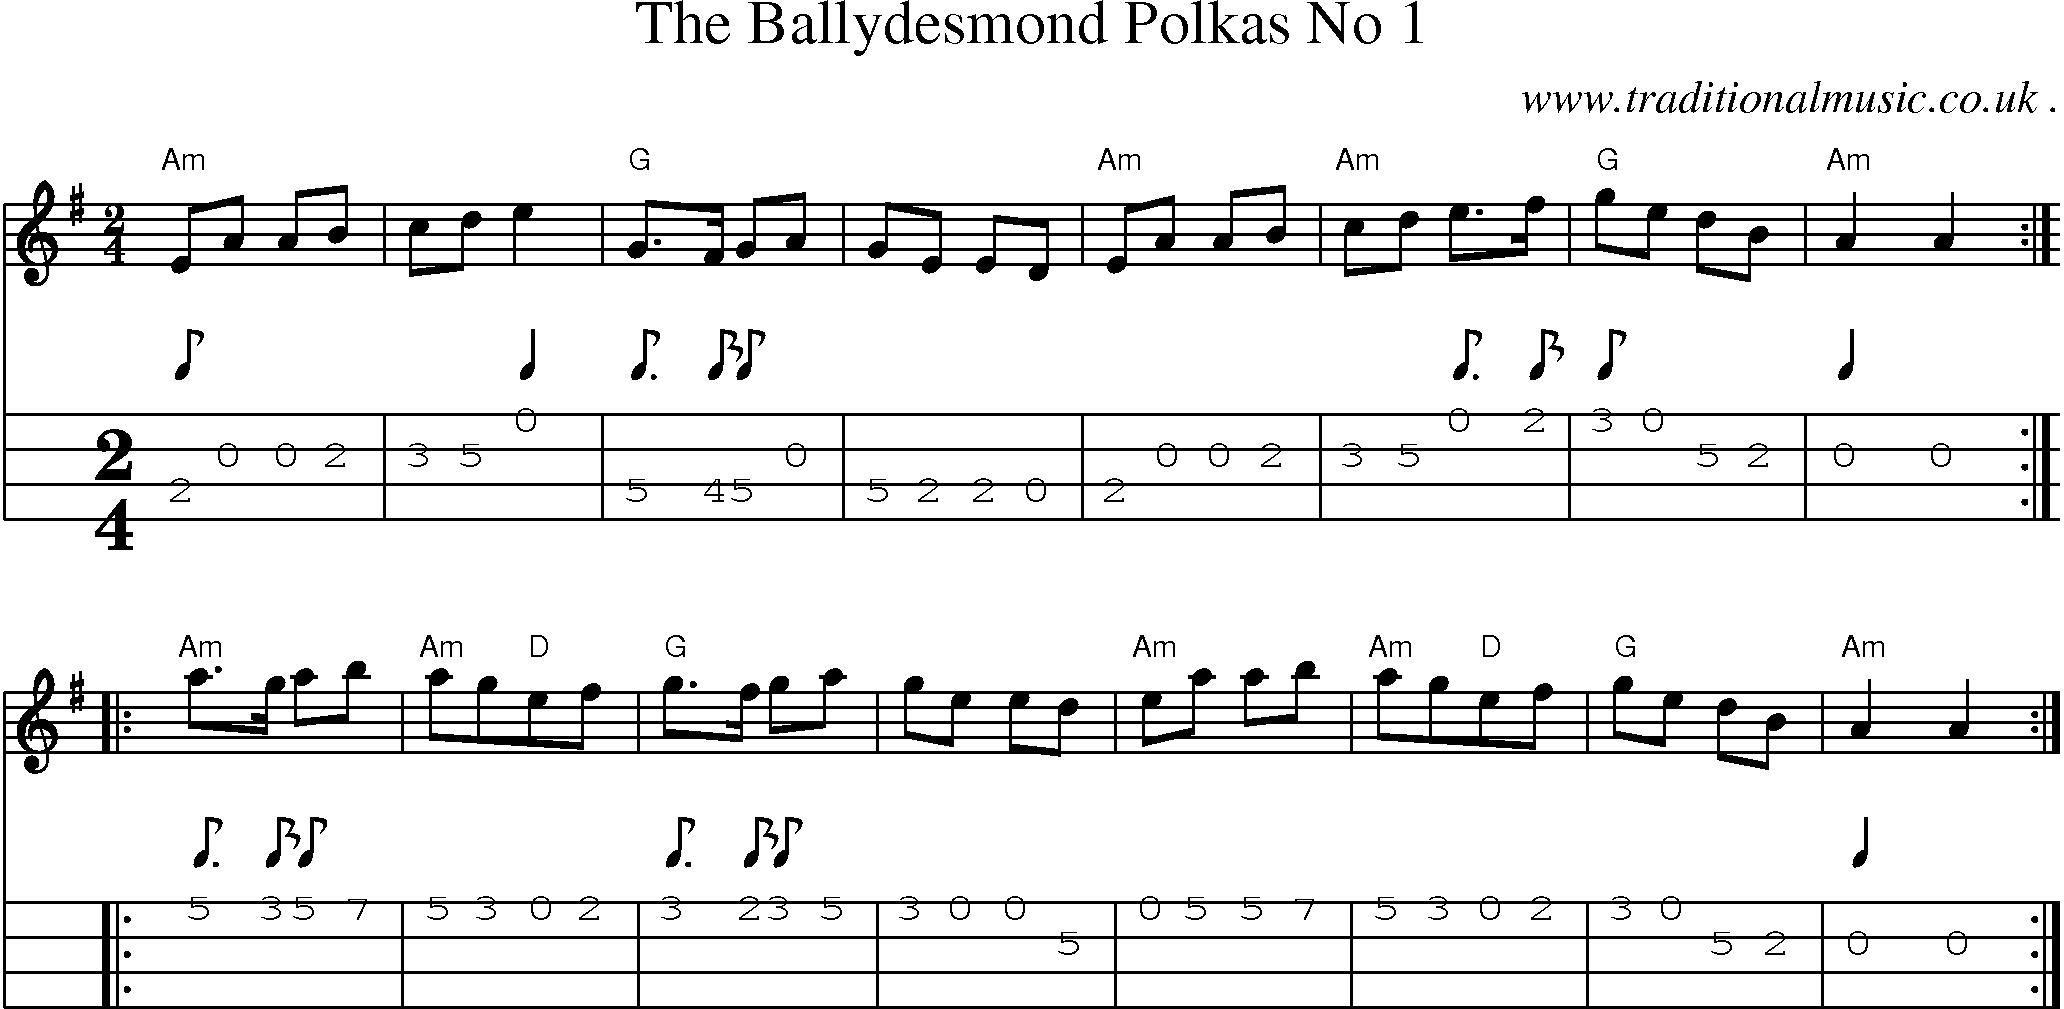 Sheet-Music and Mandolin Tabs for The Ballydesmond Polkas No 1